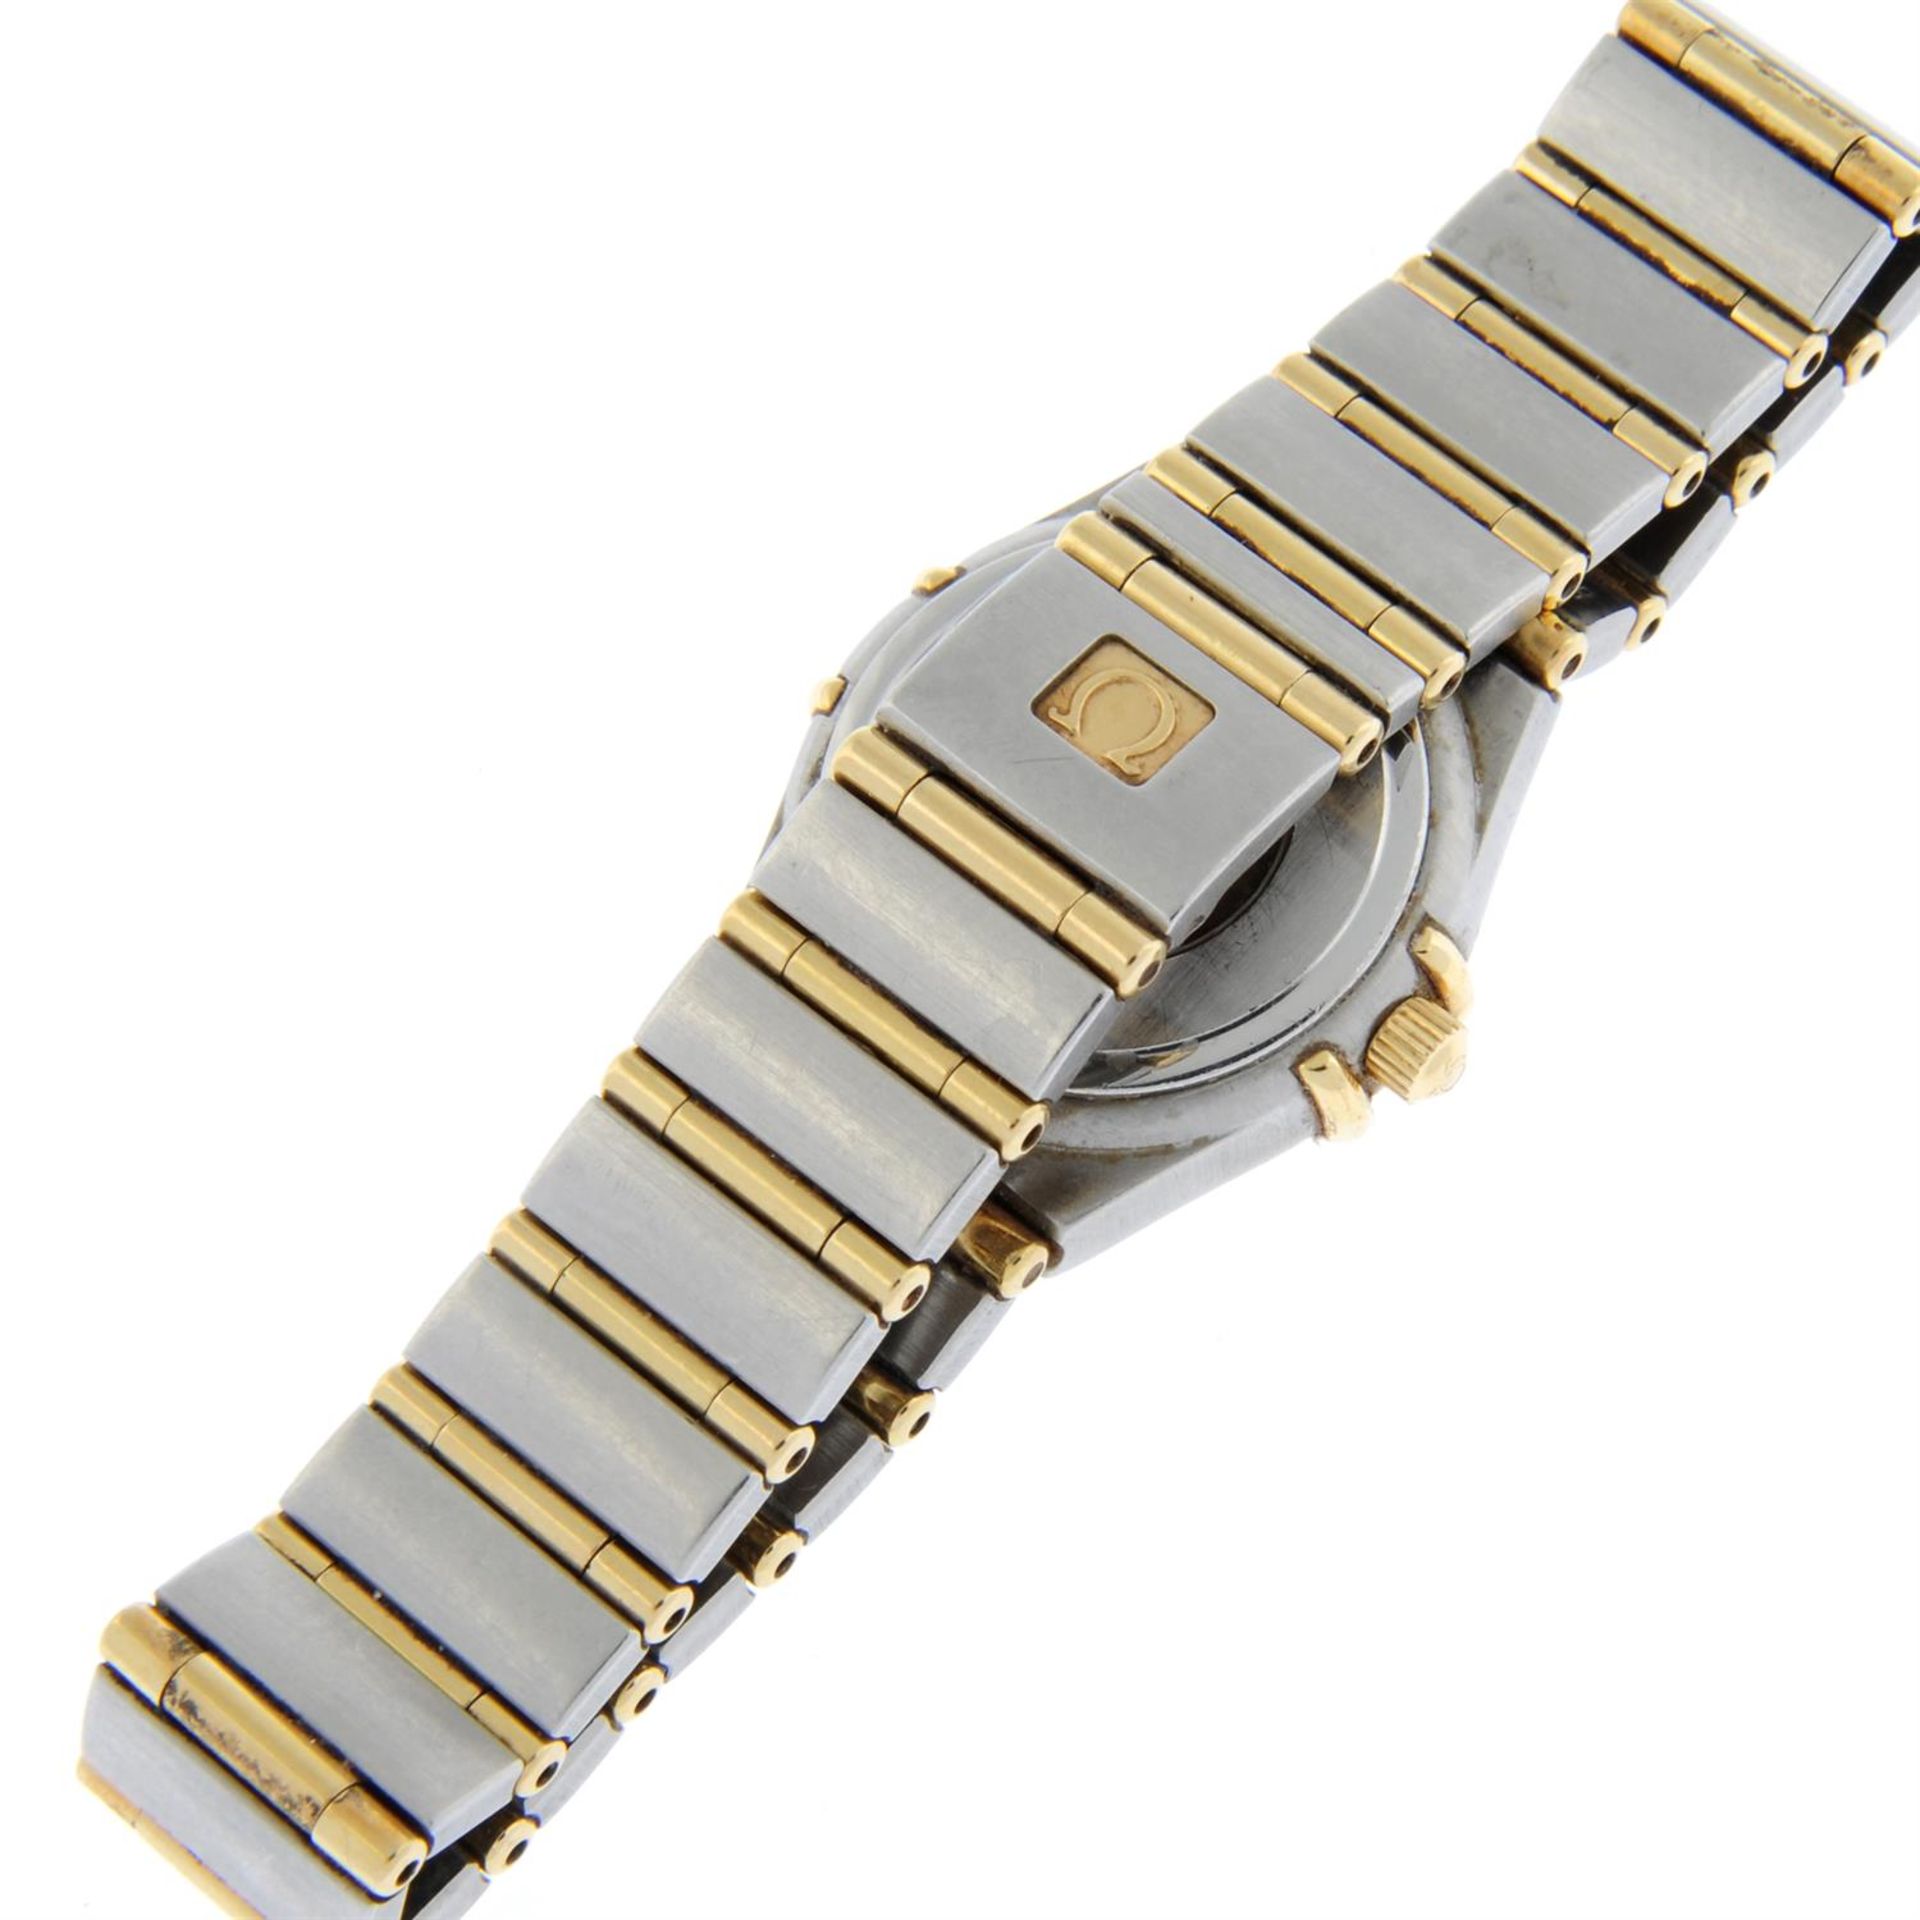 OMEGA - a bi-metal Constellation bracelet watch, 22mm. - Image 2 of 5